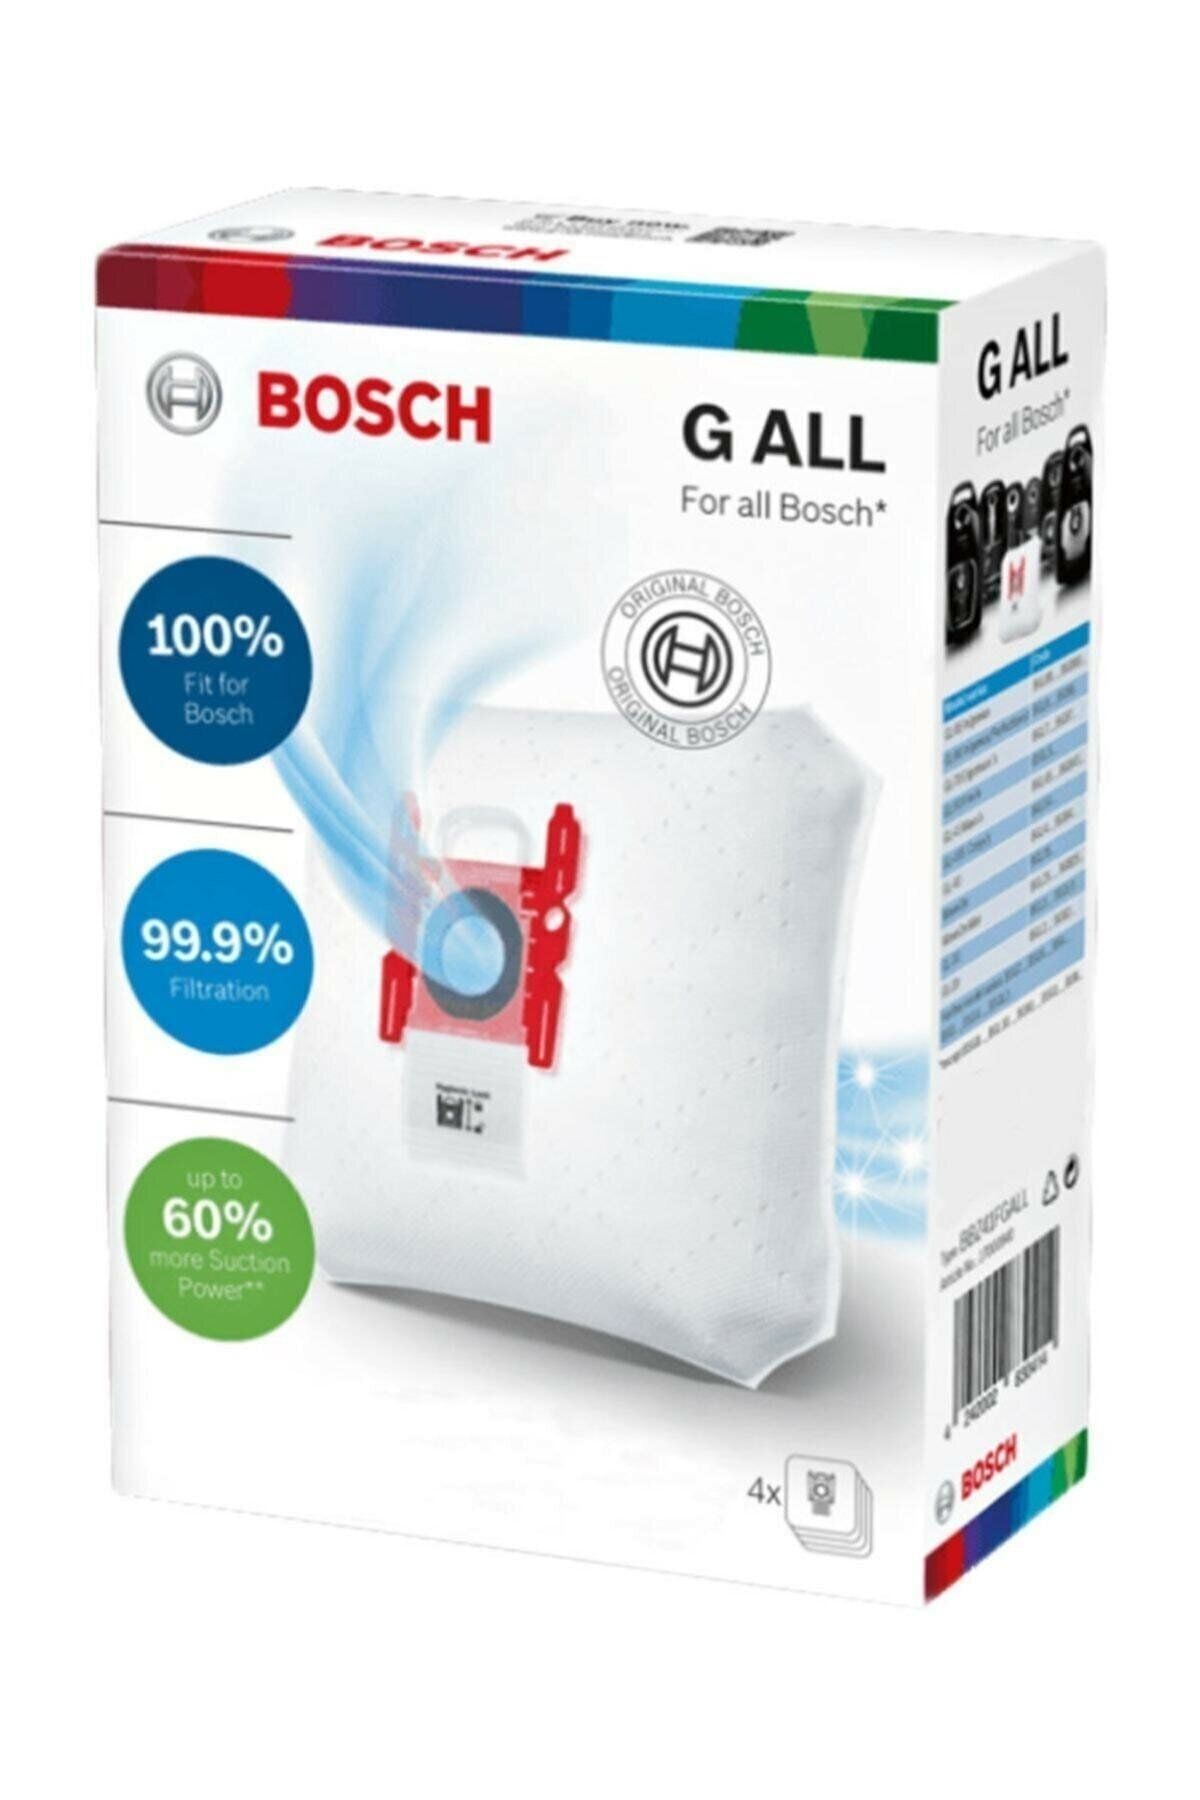 Bosch Bsg 6000-6999 Logo Süpürge G All Toz Torbası 4 Adet